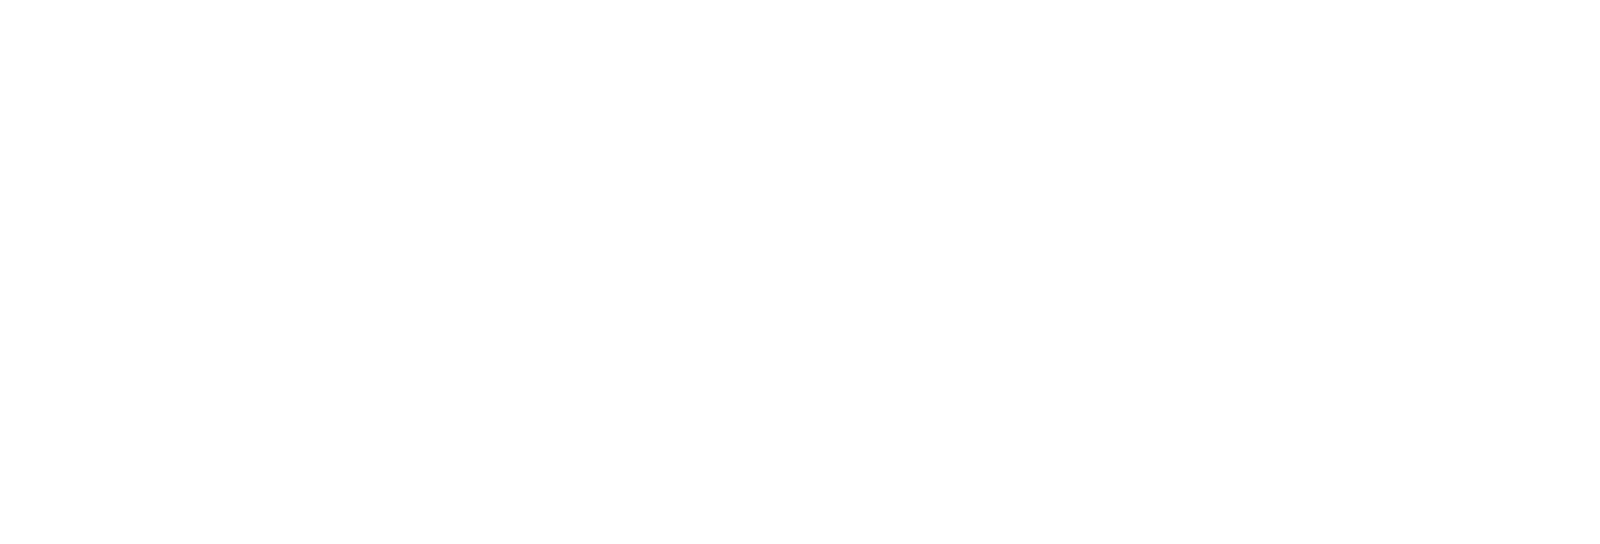 WordPress-logotype-standard-white